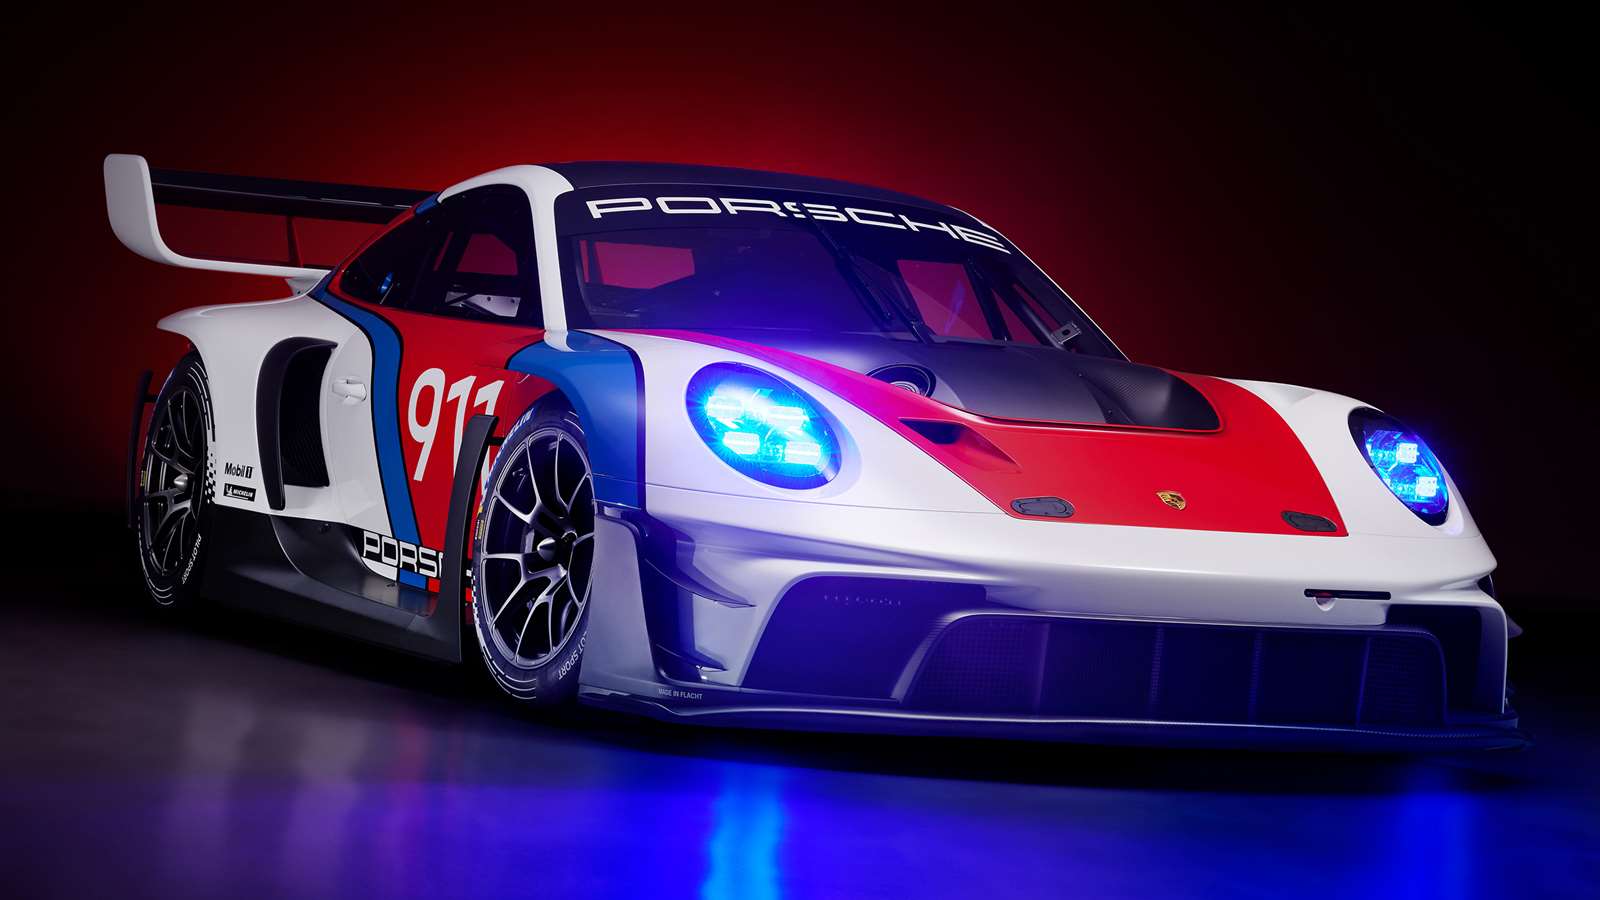 Porsche Motor Sports - Porsche live at the race track - Porsche USA